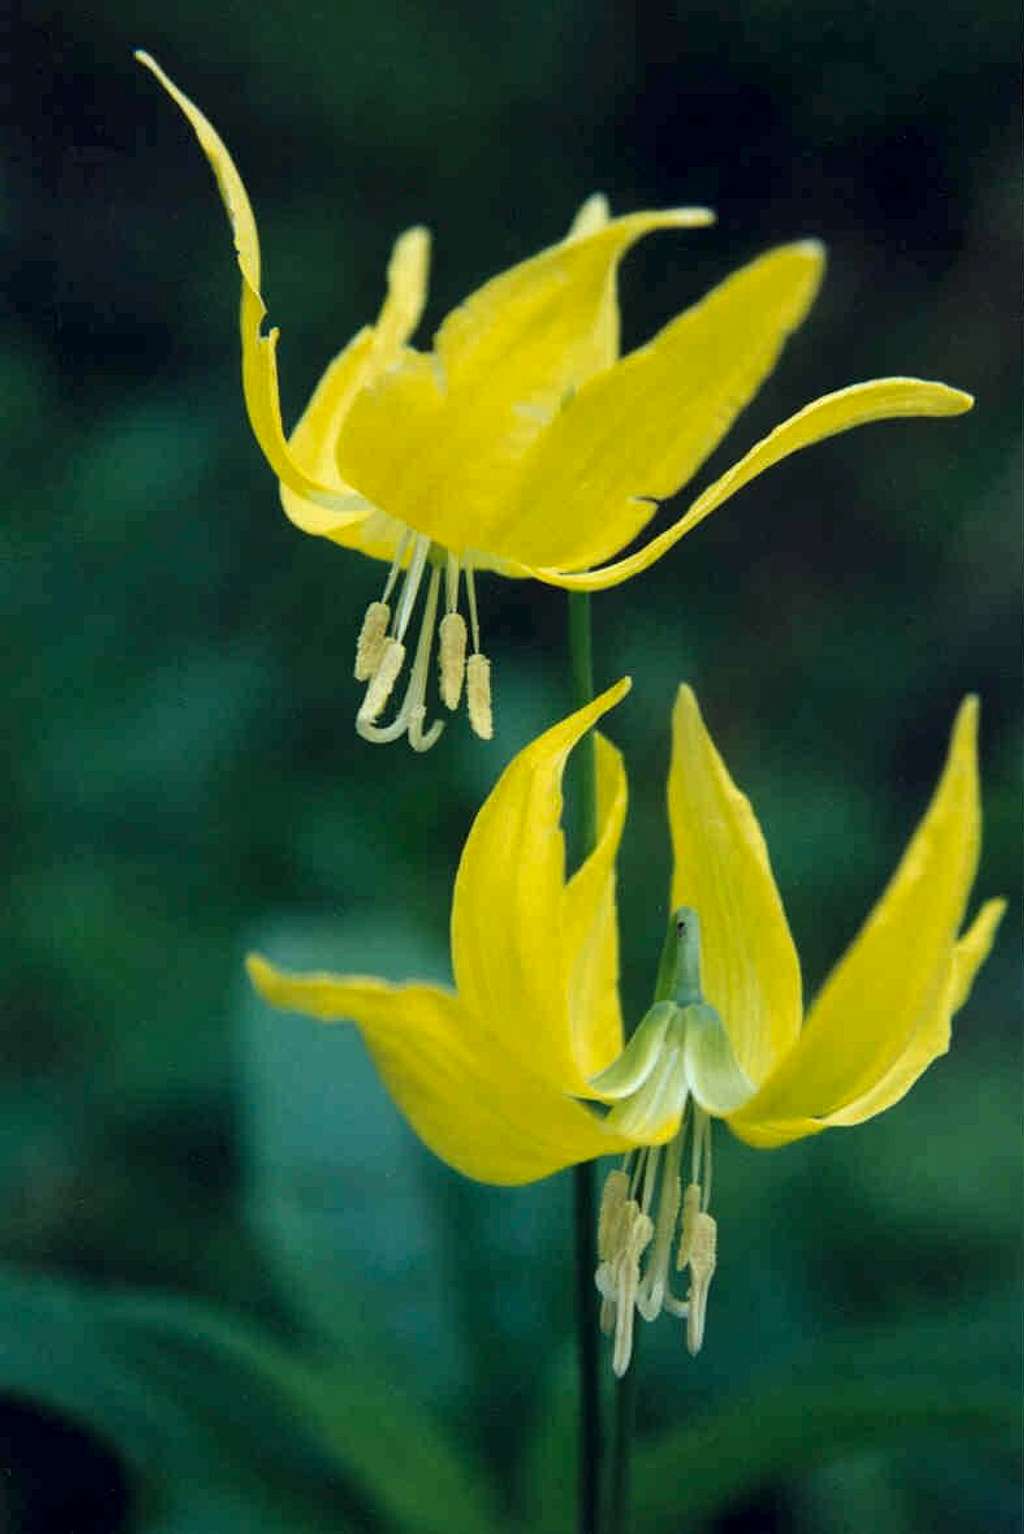 Yellow Fawn-lily (Erythronium grandiflorum)